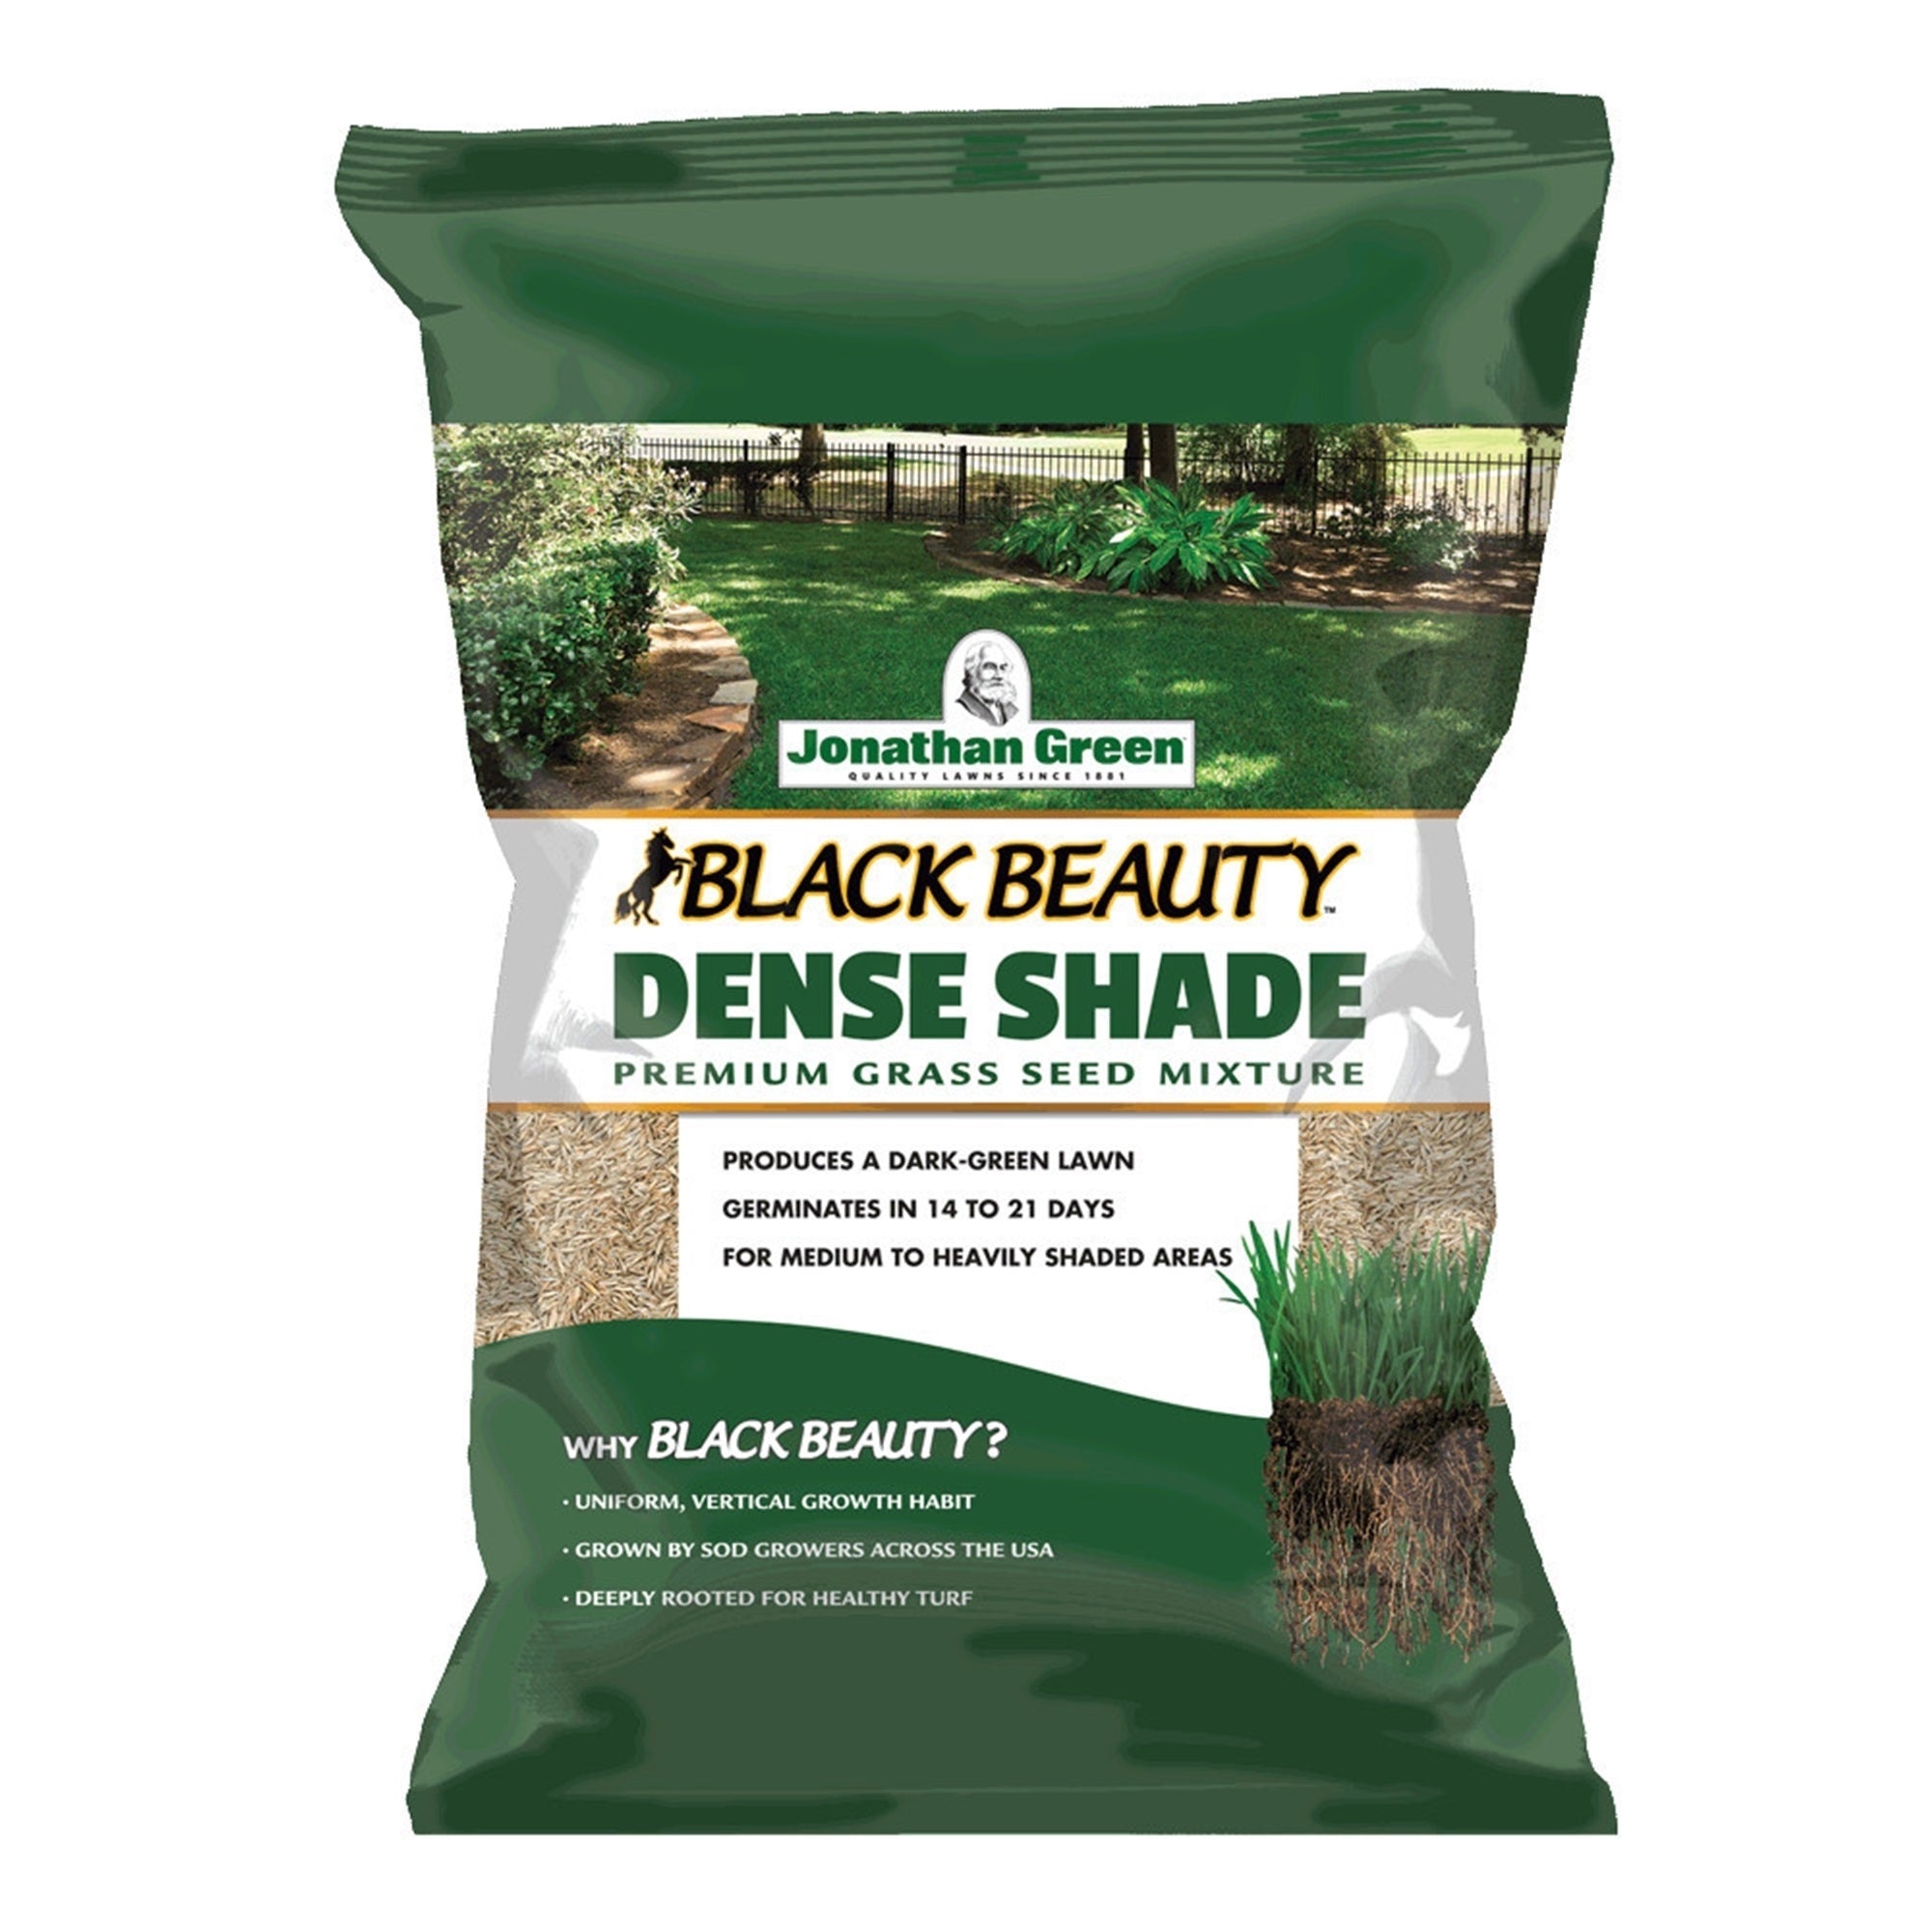 Jonathan Green Black Beauty Dense Shade Grass Seed Mix